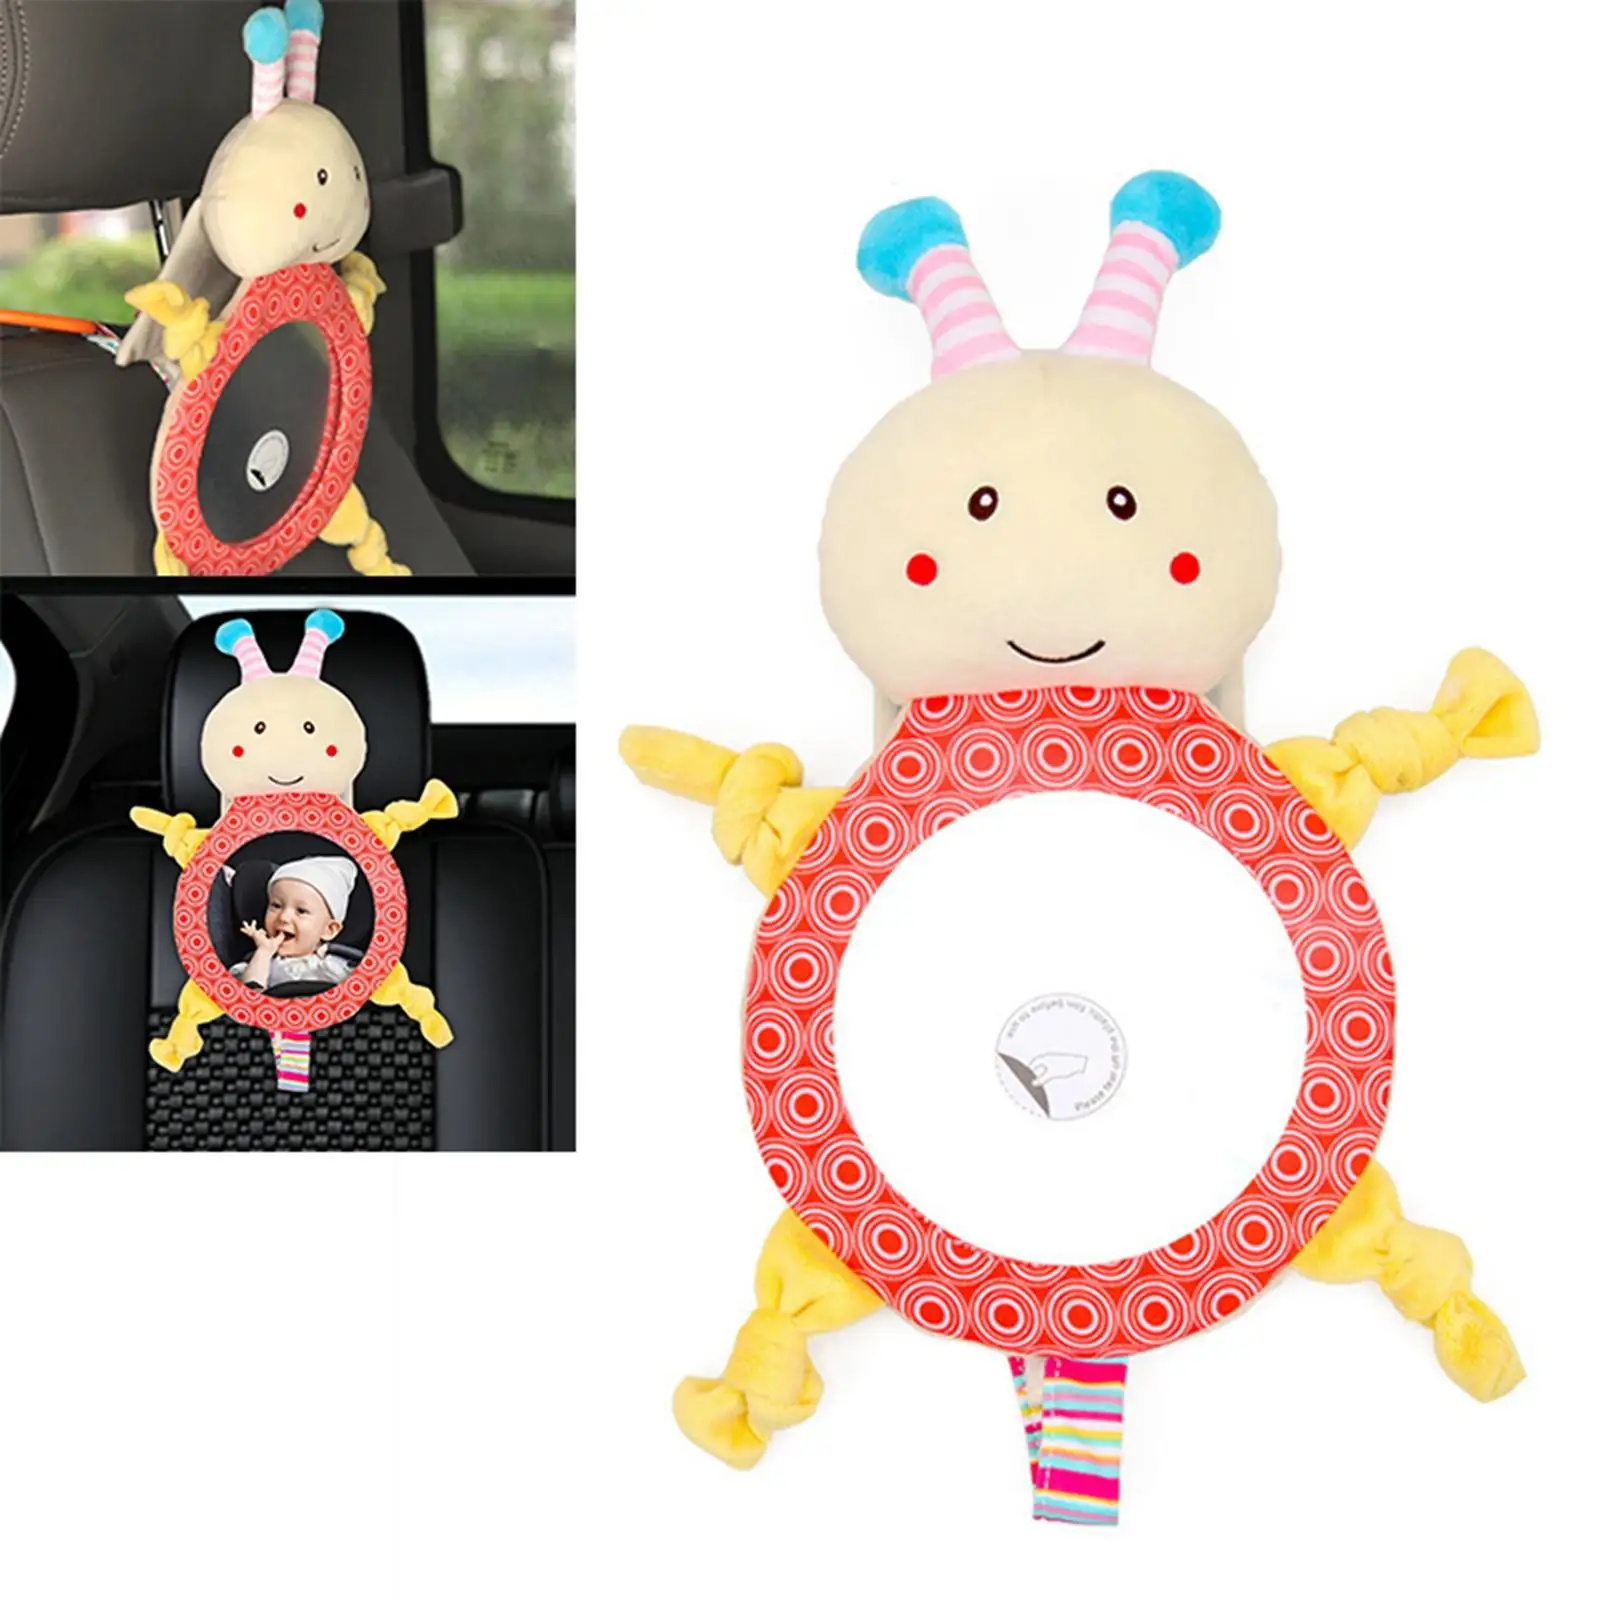 Animal  Mirror  Easy Hanging Shatterproof Easier Drive Blind  Infant Car Safety Mirror